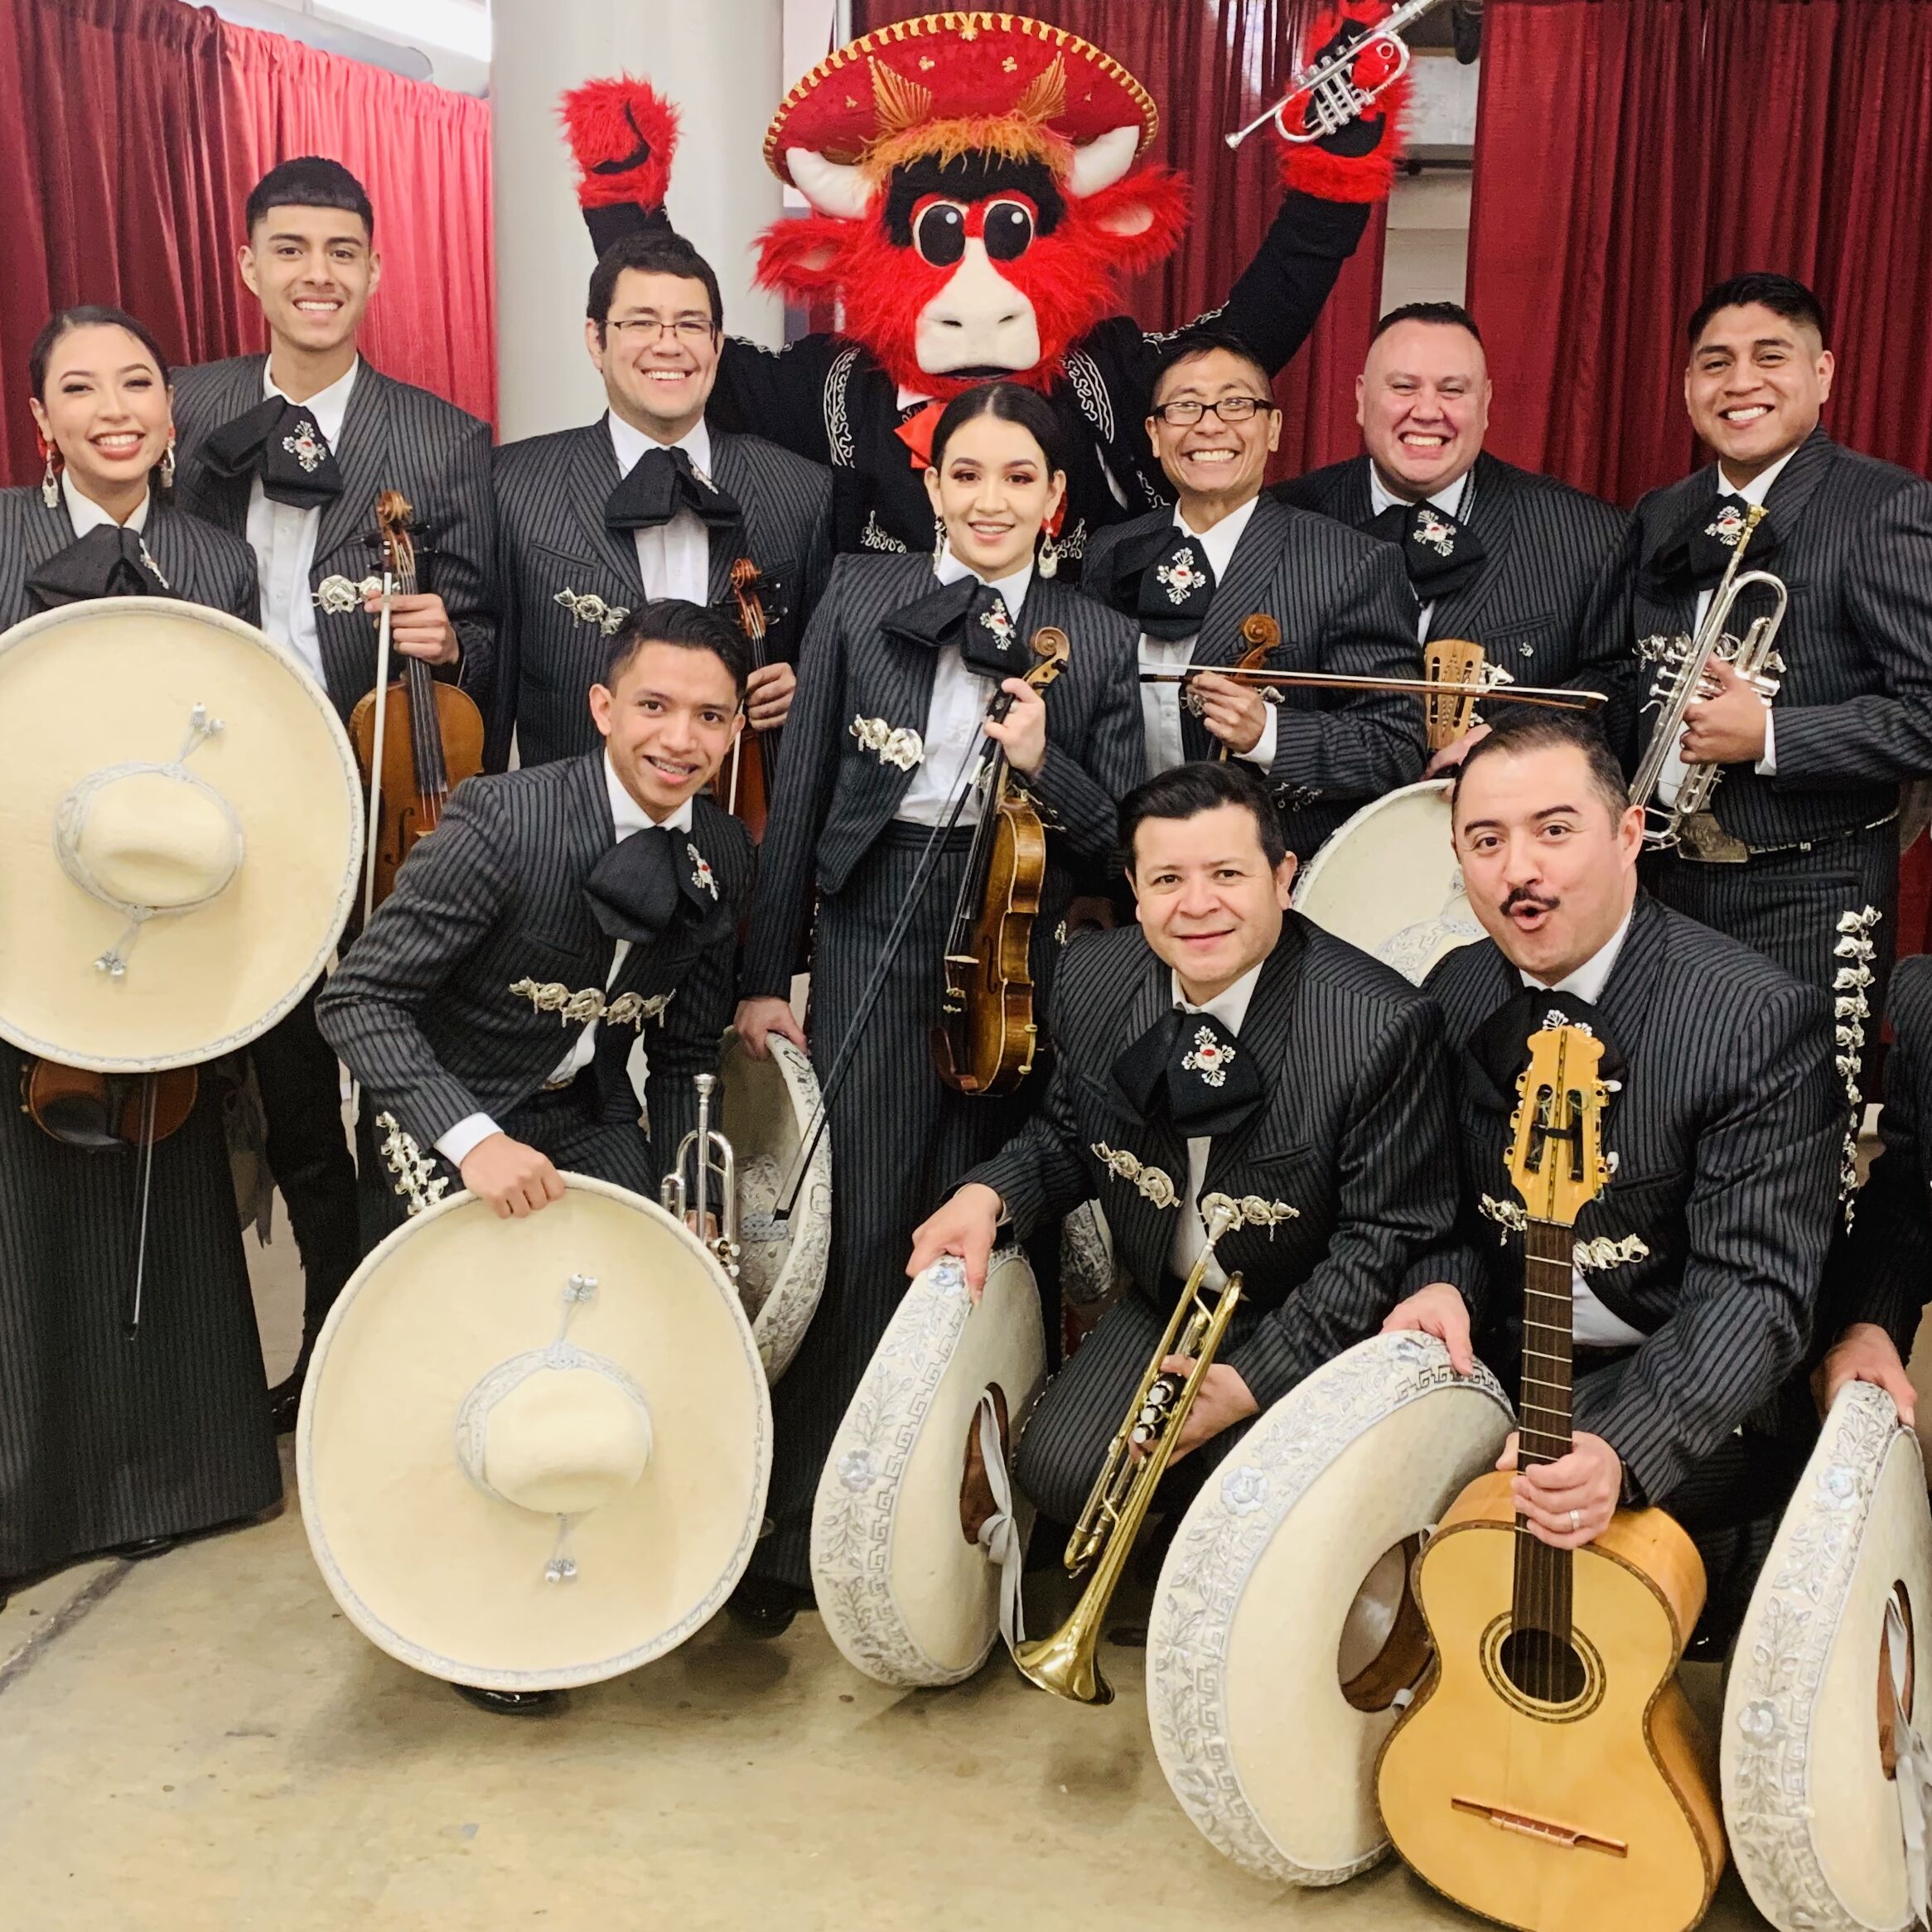 Mariachi Monumental De Mexico - Mariachi Band Chicago, IL - The Bash